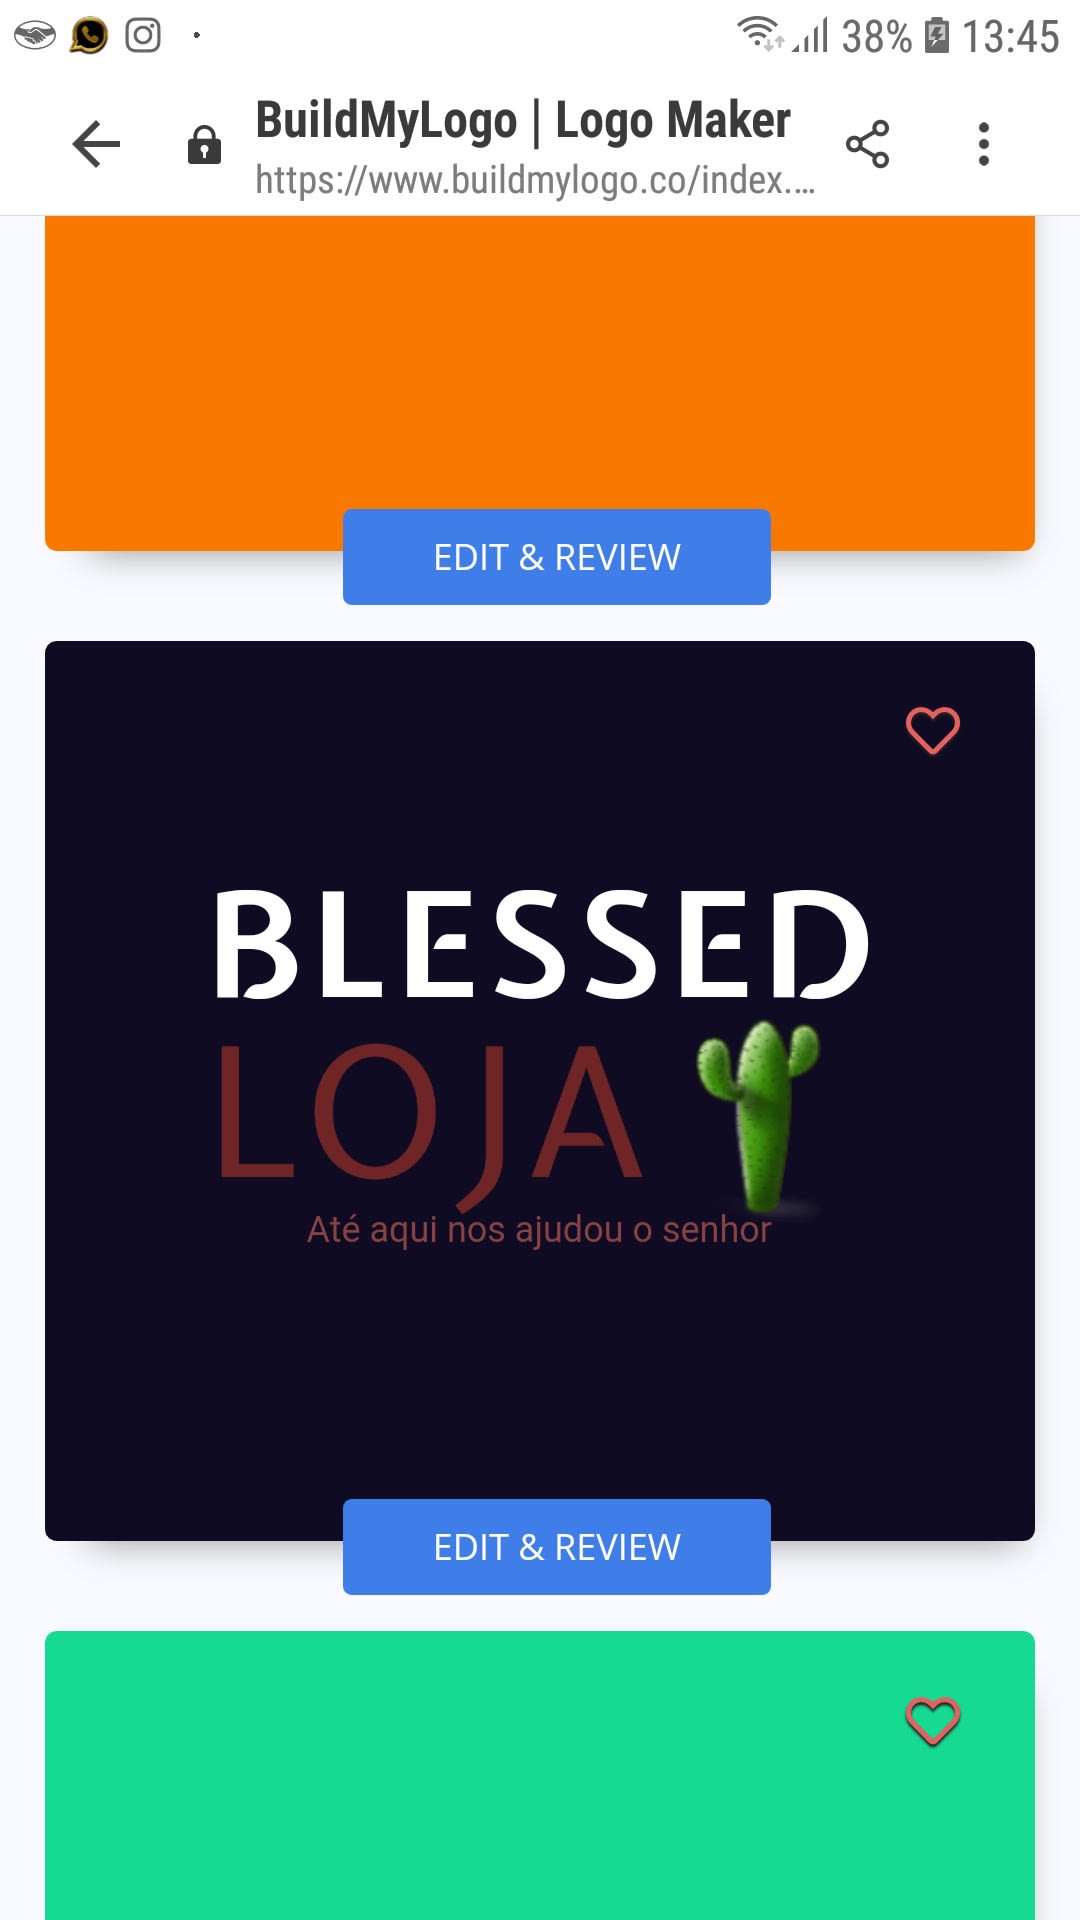 Blessed Loja